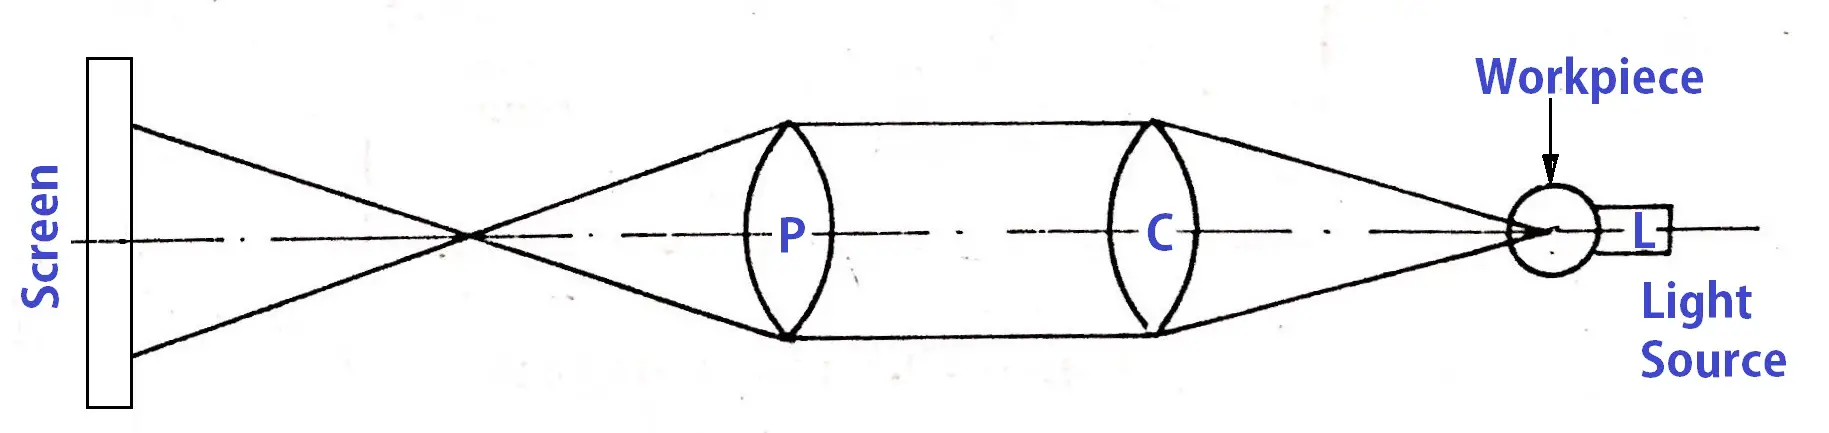 Optical Profile Projector working principle